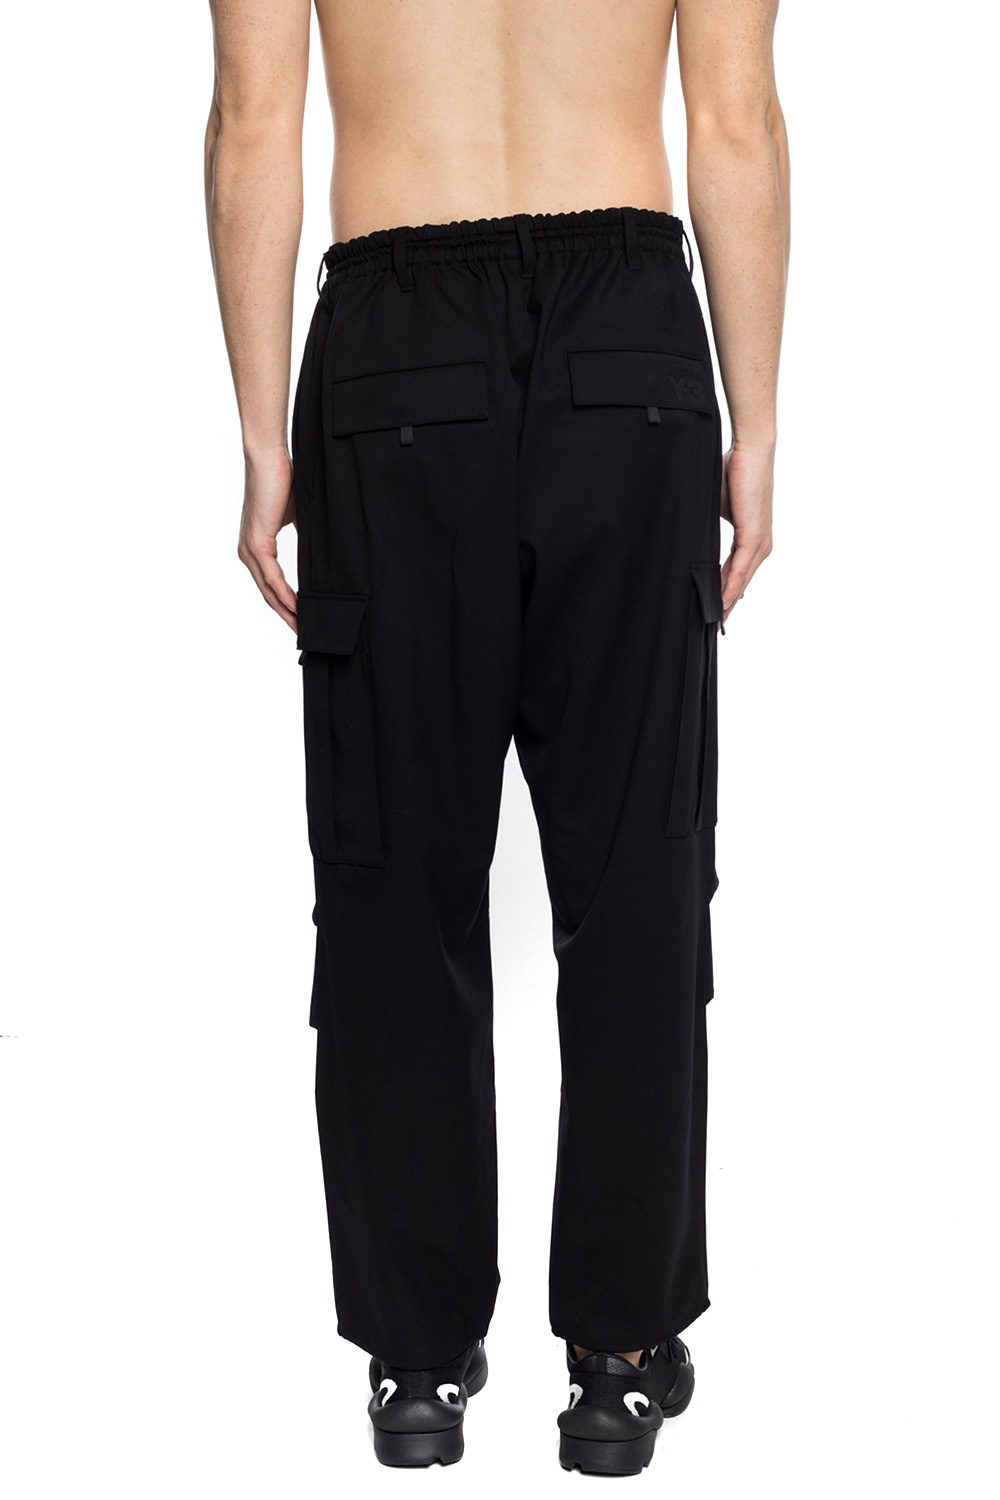 Y-3 Yohji Yamamoto Trousers with logo | Men's Clothing | Vitkac